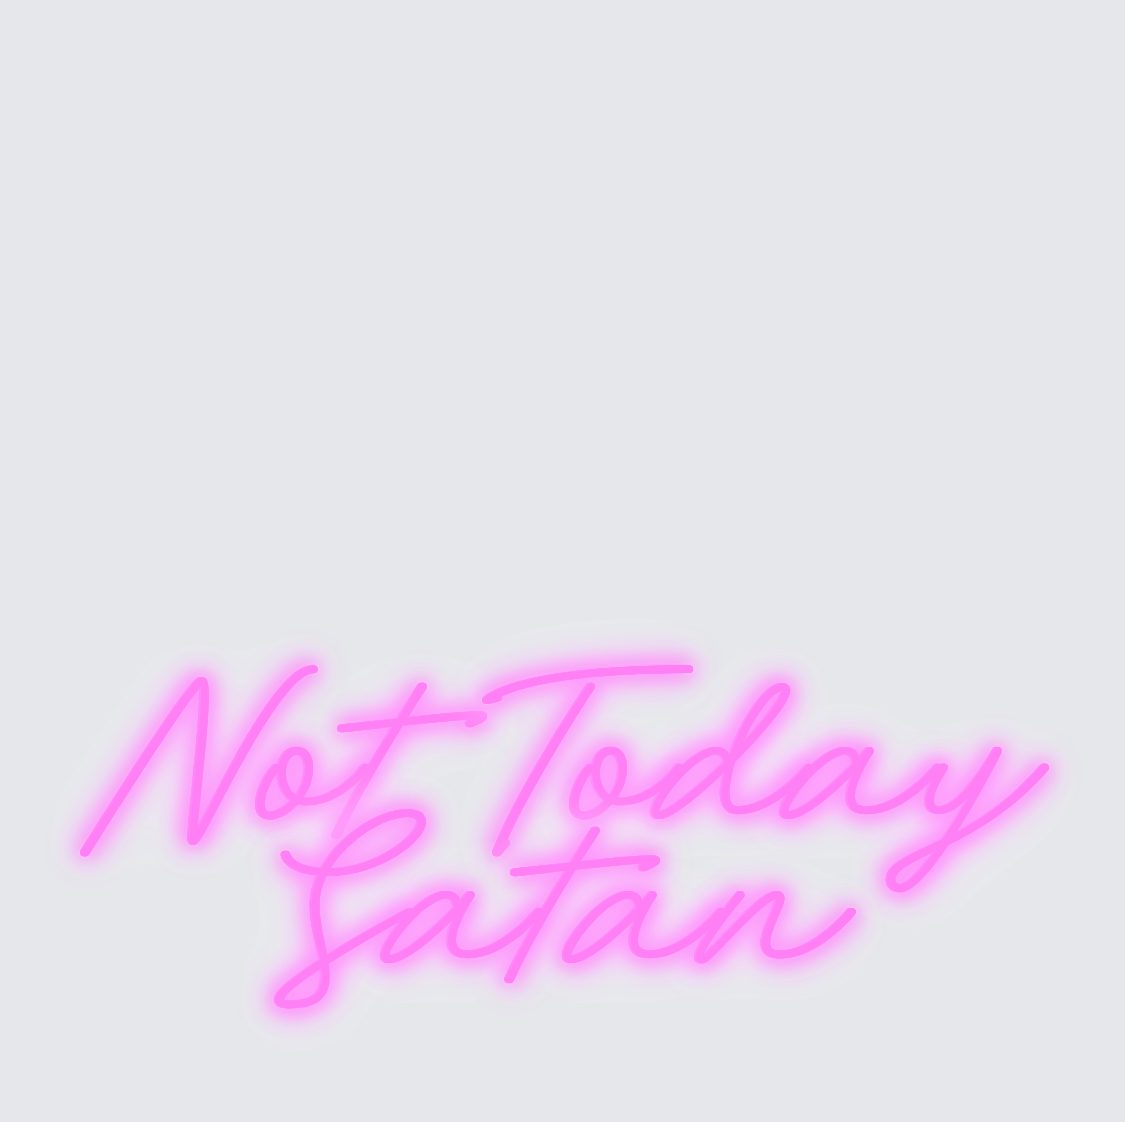 Custom neon sign - Not Today Satan